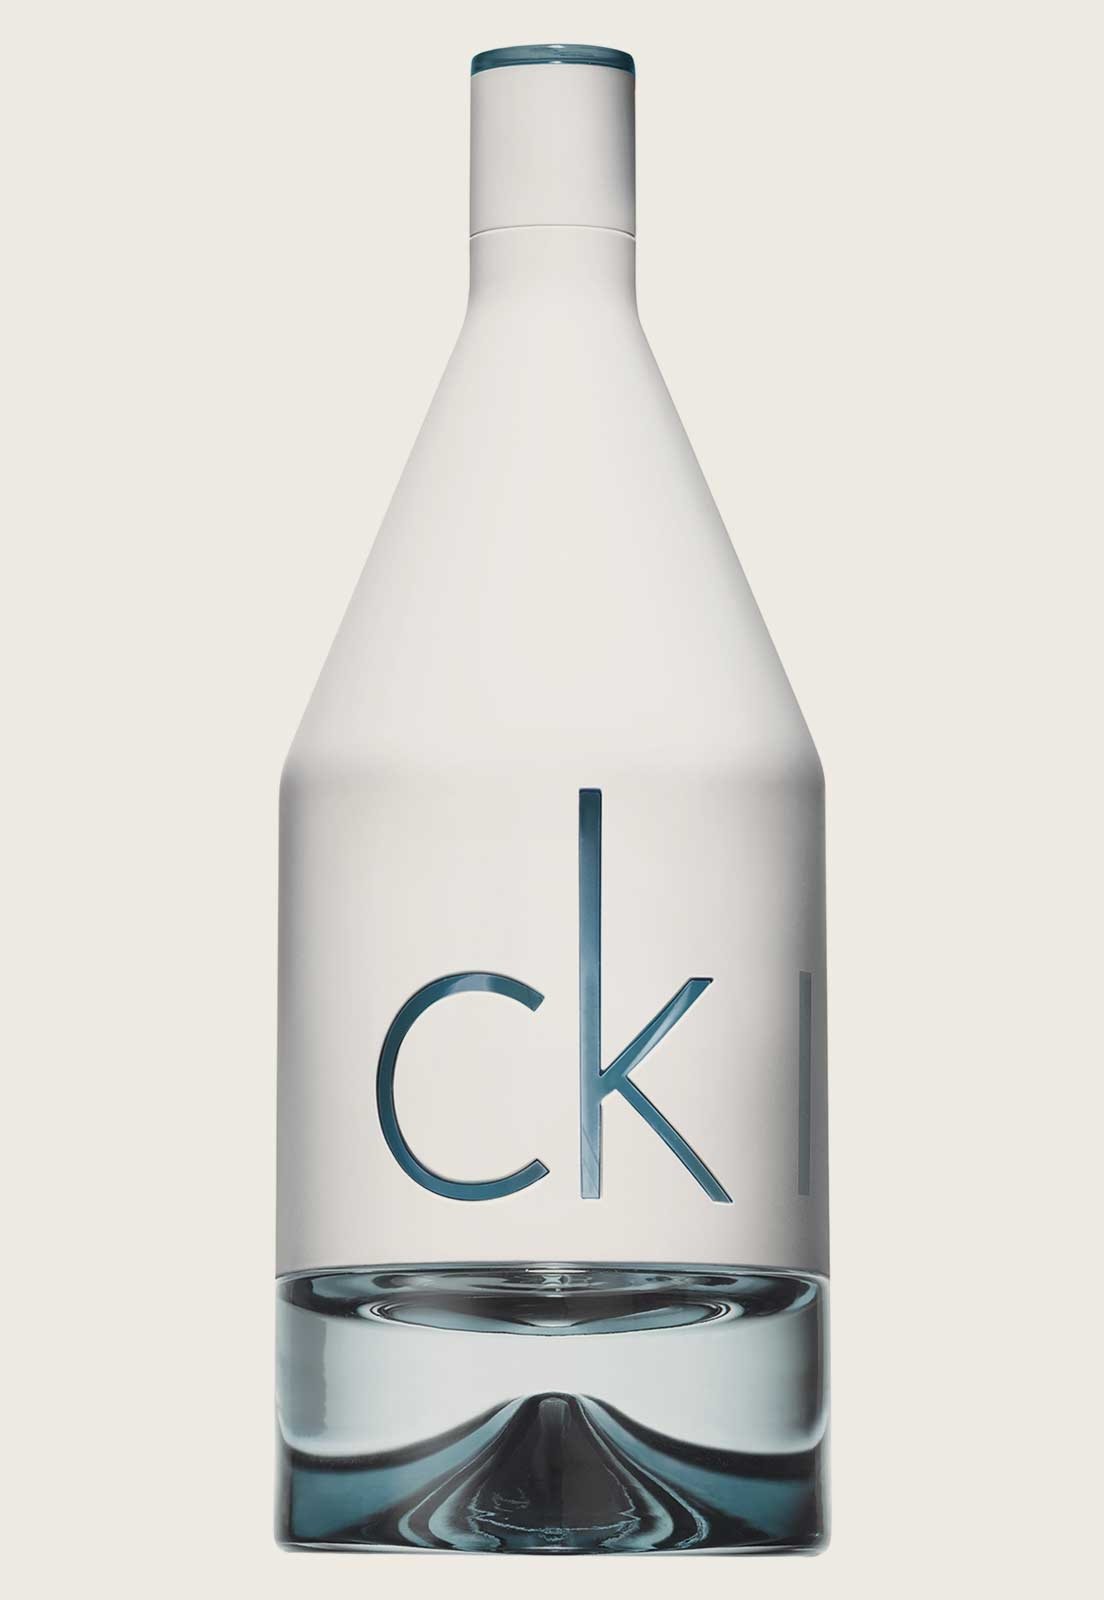 Kit Perfume Feminino Calvin Klein Ck One 100ml Com Espelho de